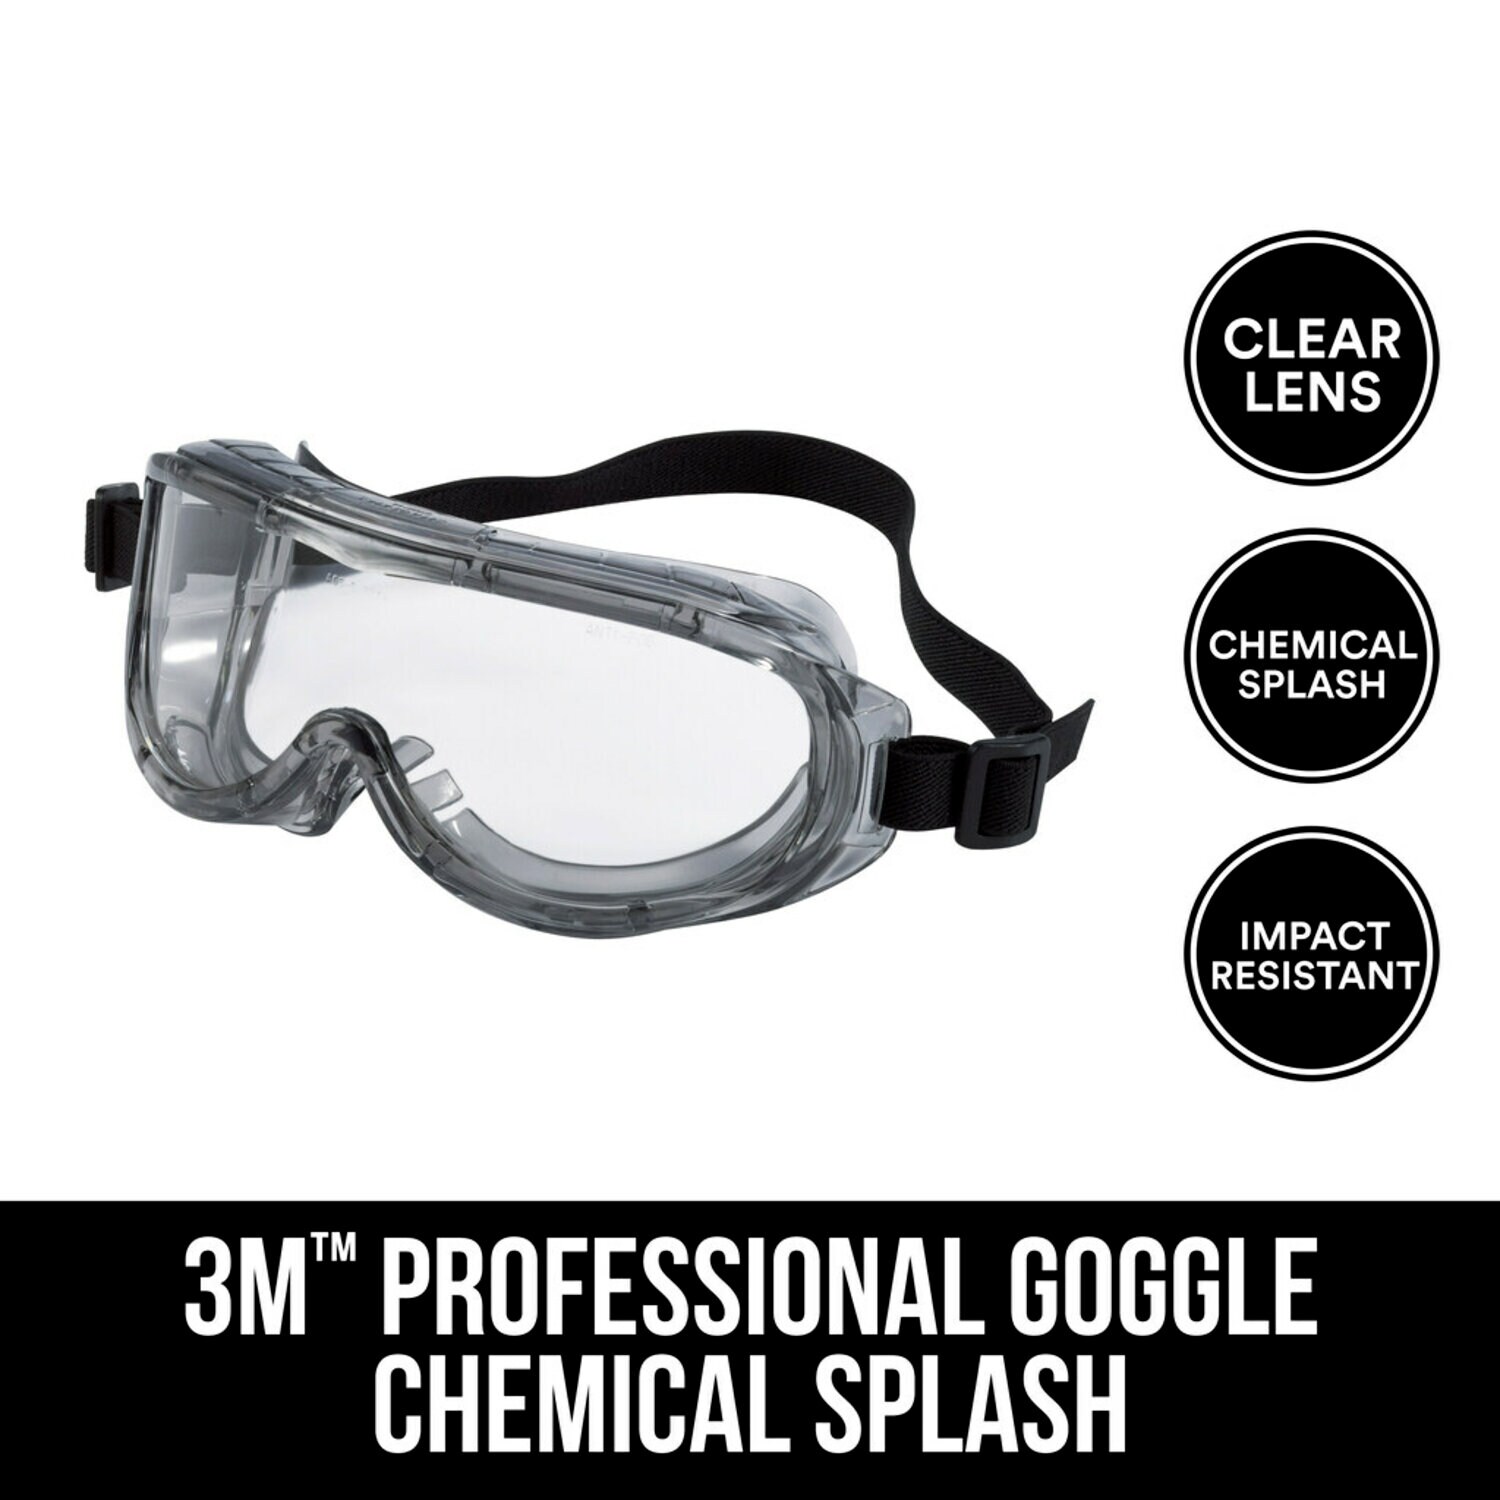 7100160750 - 3M Professional Goggle, Chemical Splash, 91264H1-DC, Black Strap, Gray
Lens, 4/case